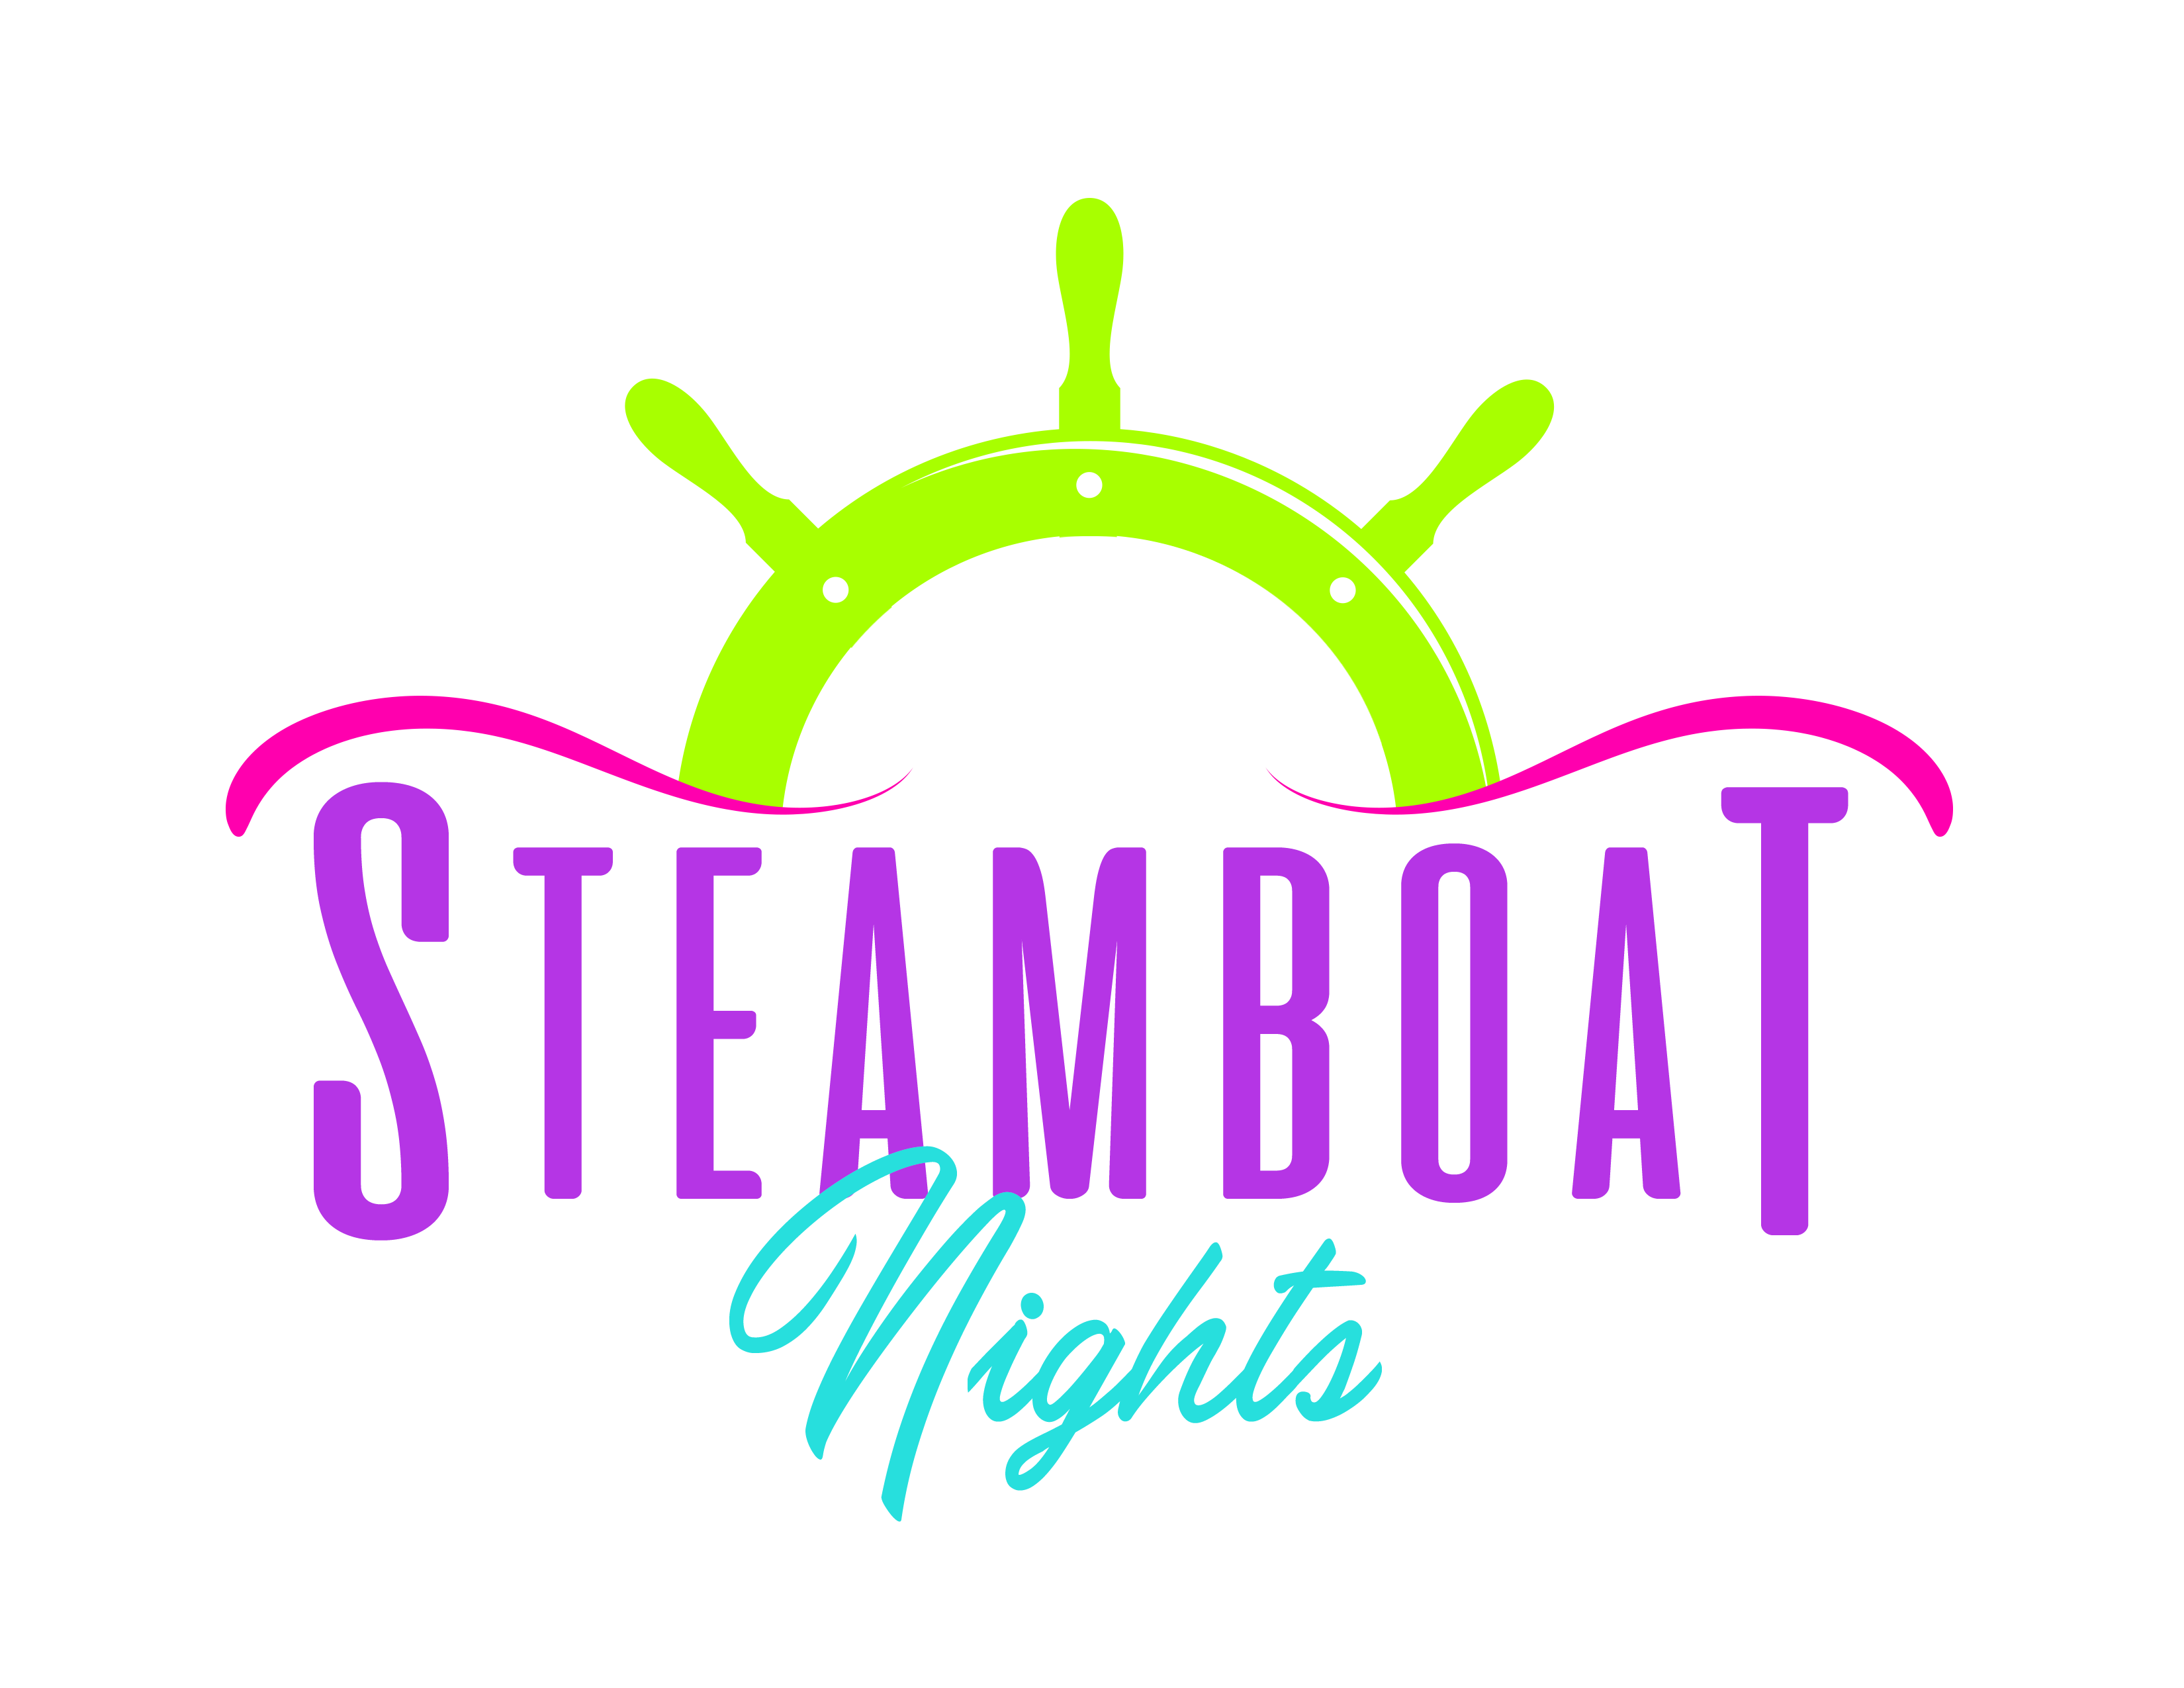 Steamboat Nights